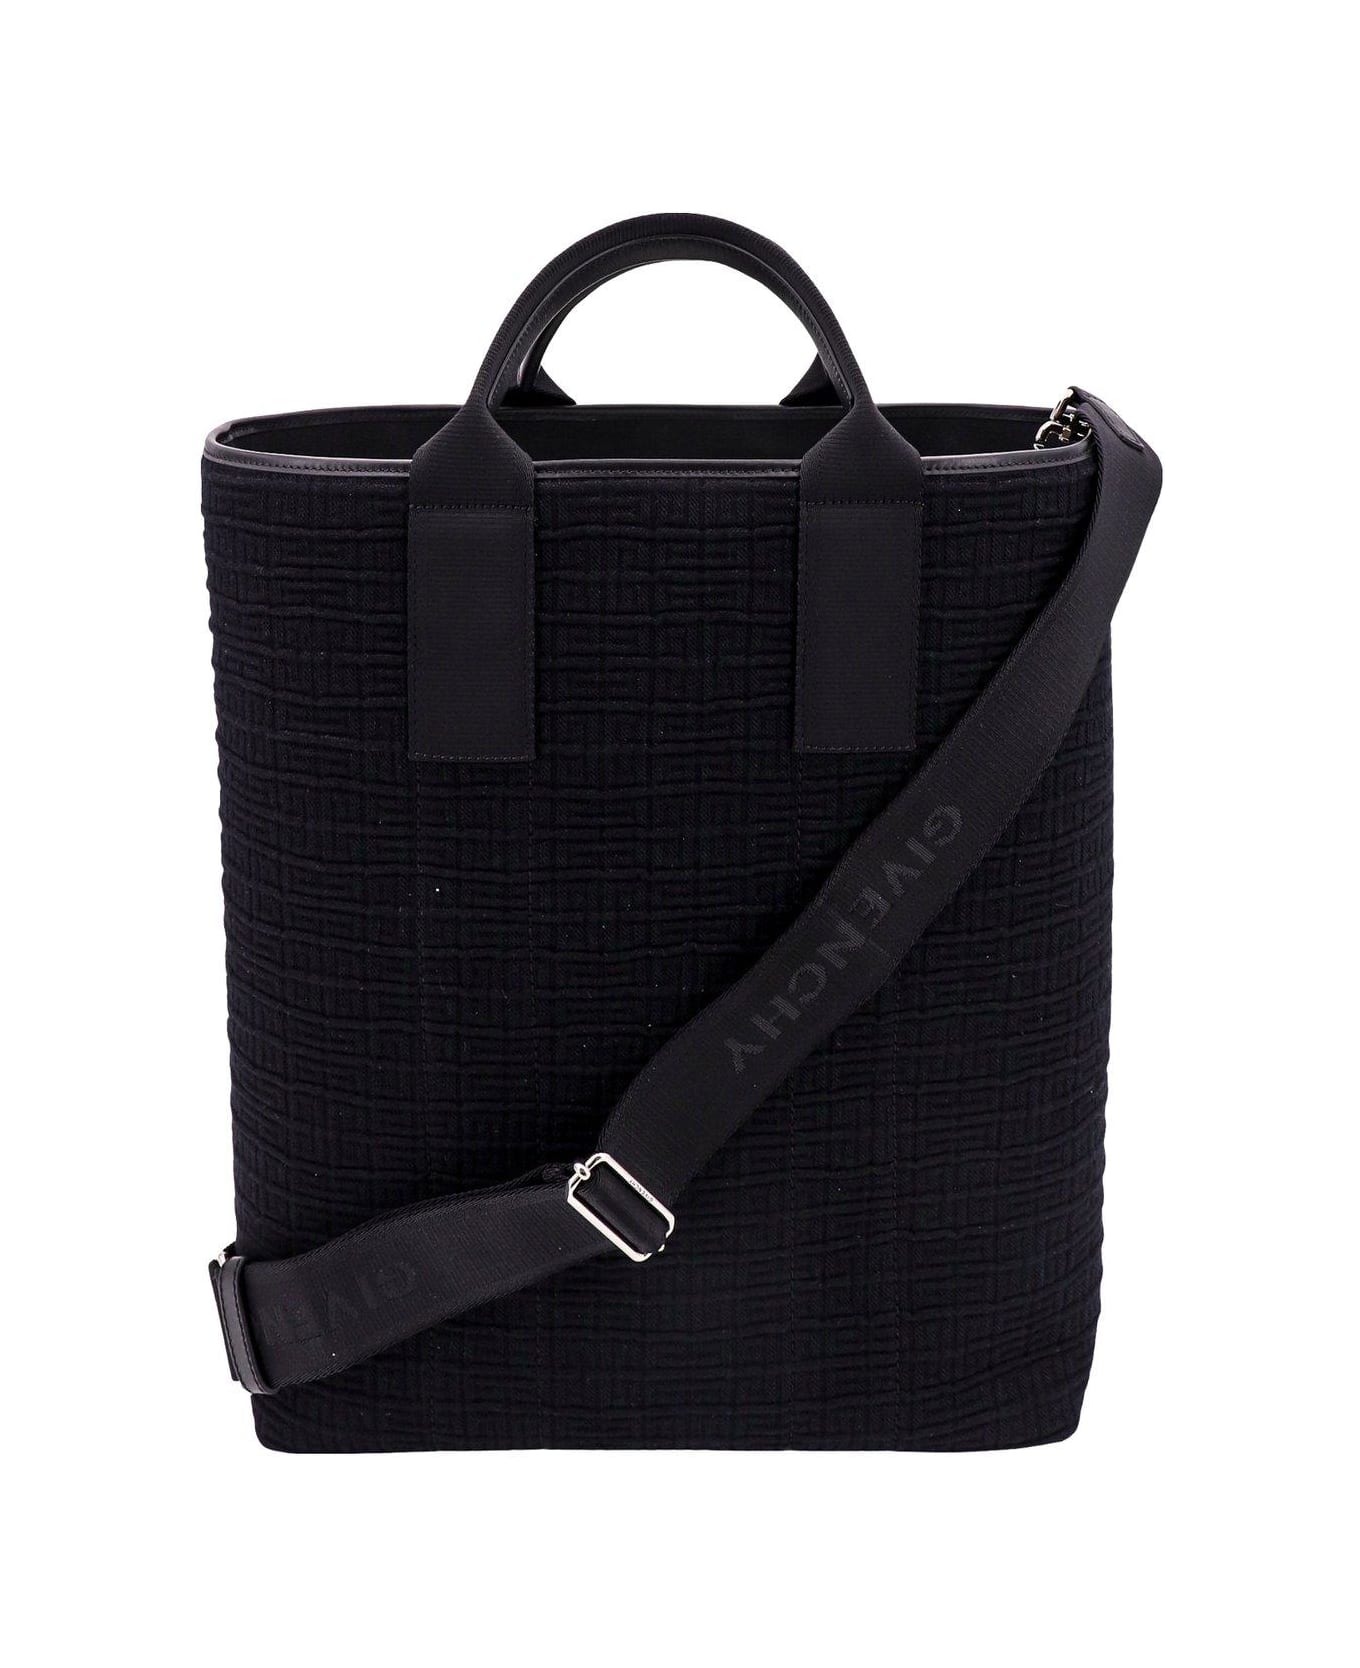 Givenchy Large G-essentials Tote Bag - Black トートバッグ